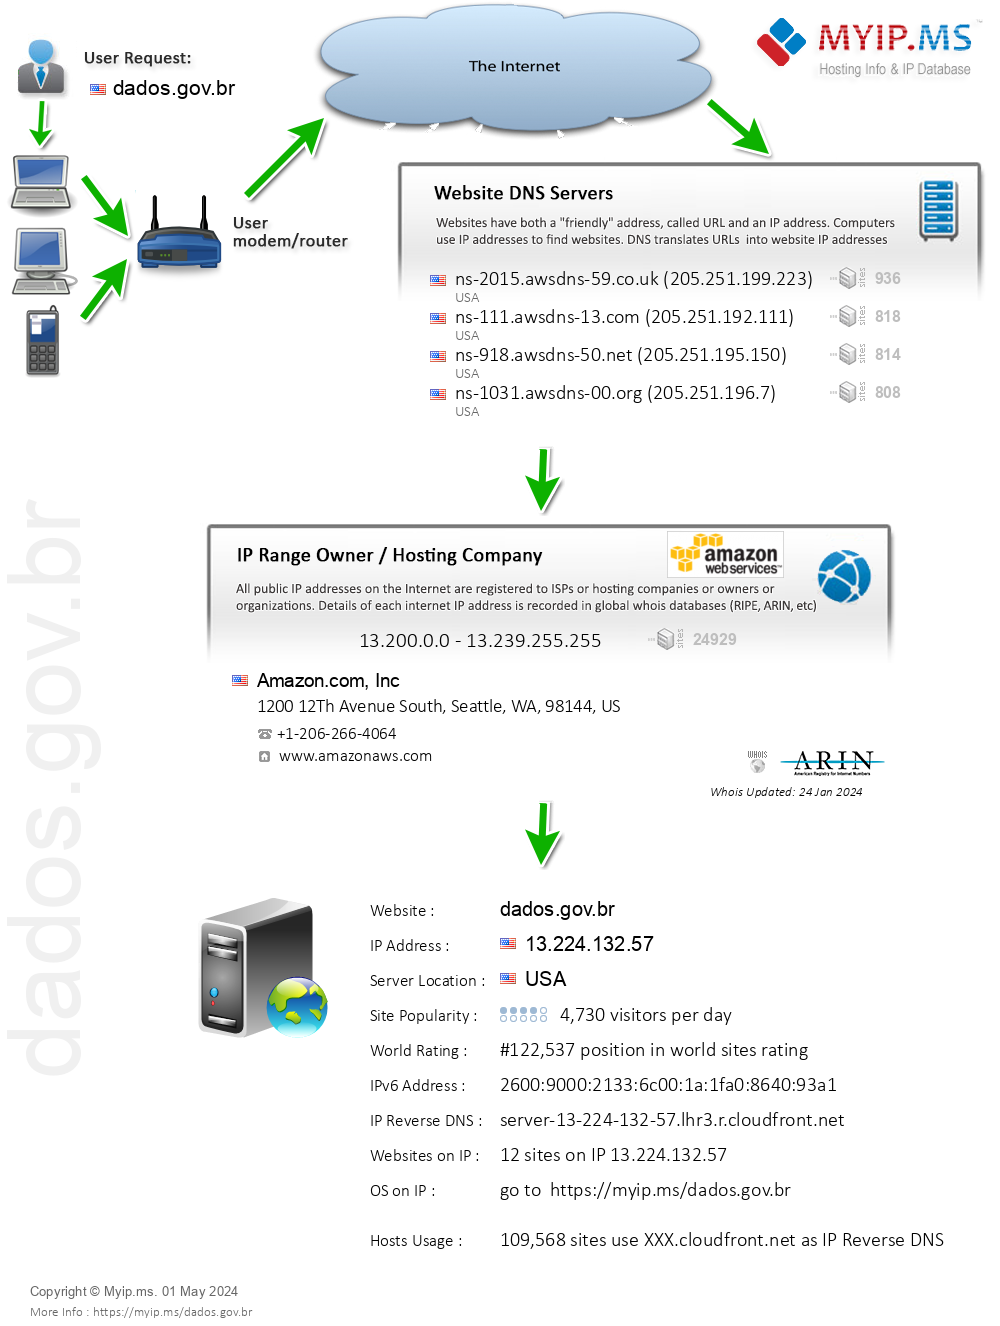 Dados.gov.br - Website Hosting Visual IP Diagram